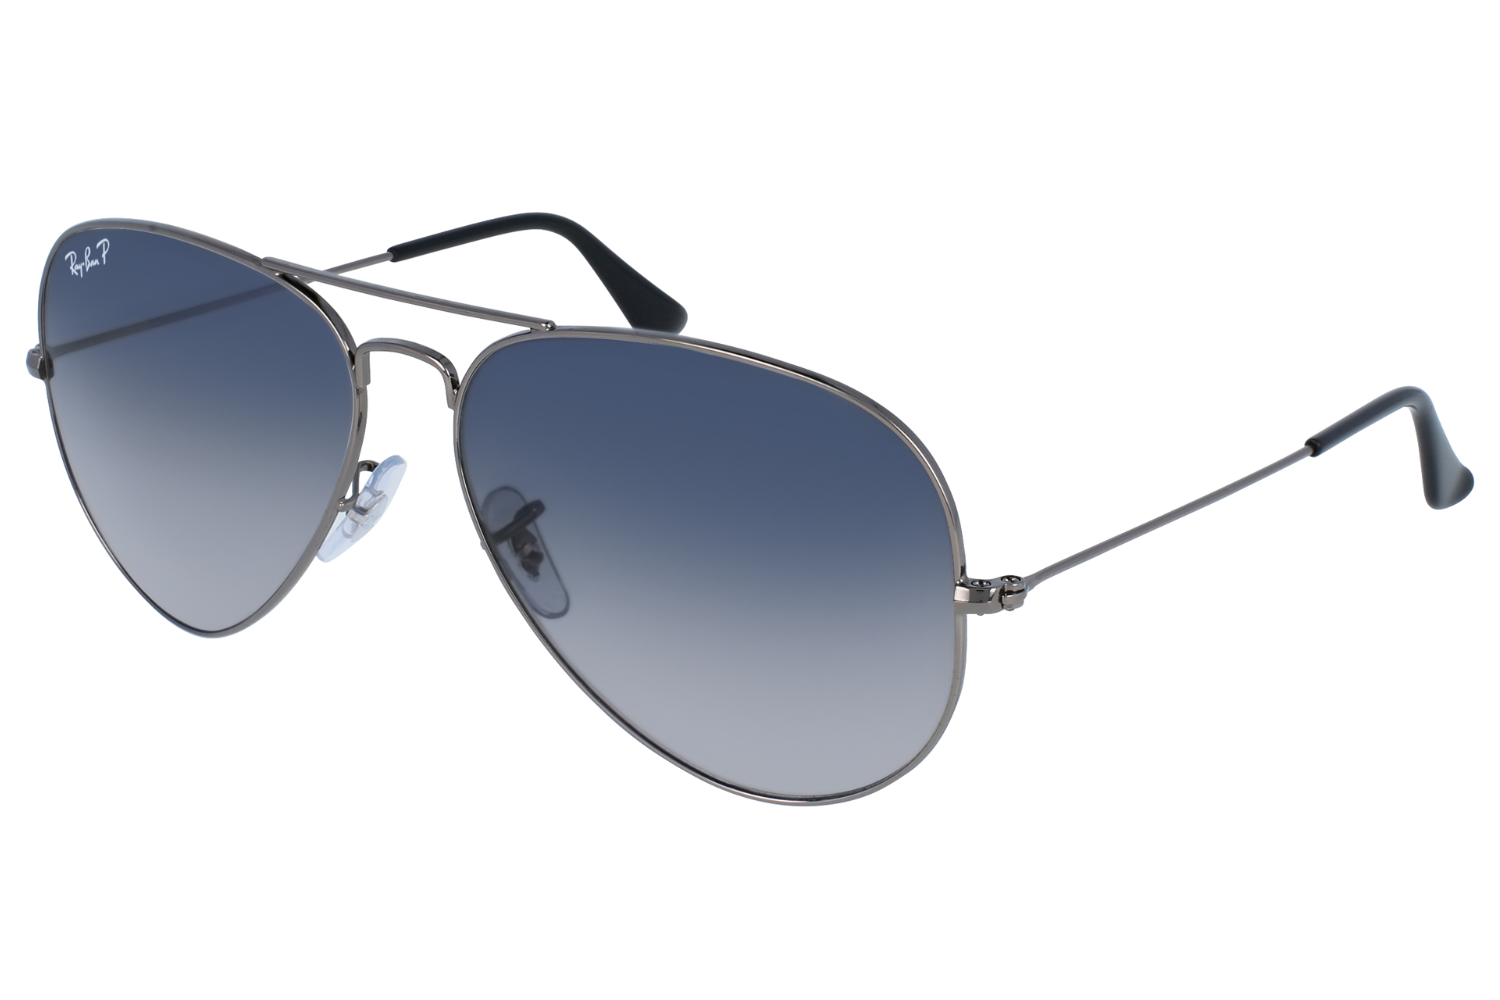 Buy Ray-Ban Meta Wayfarer - Shiny Black, Clear | Smart glasses | Argos